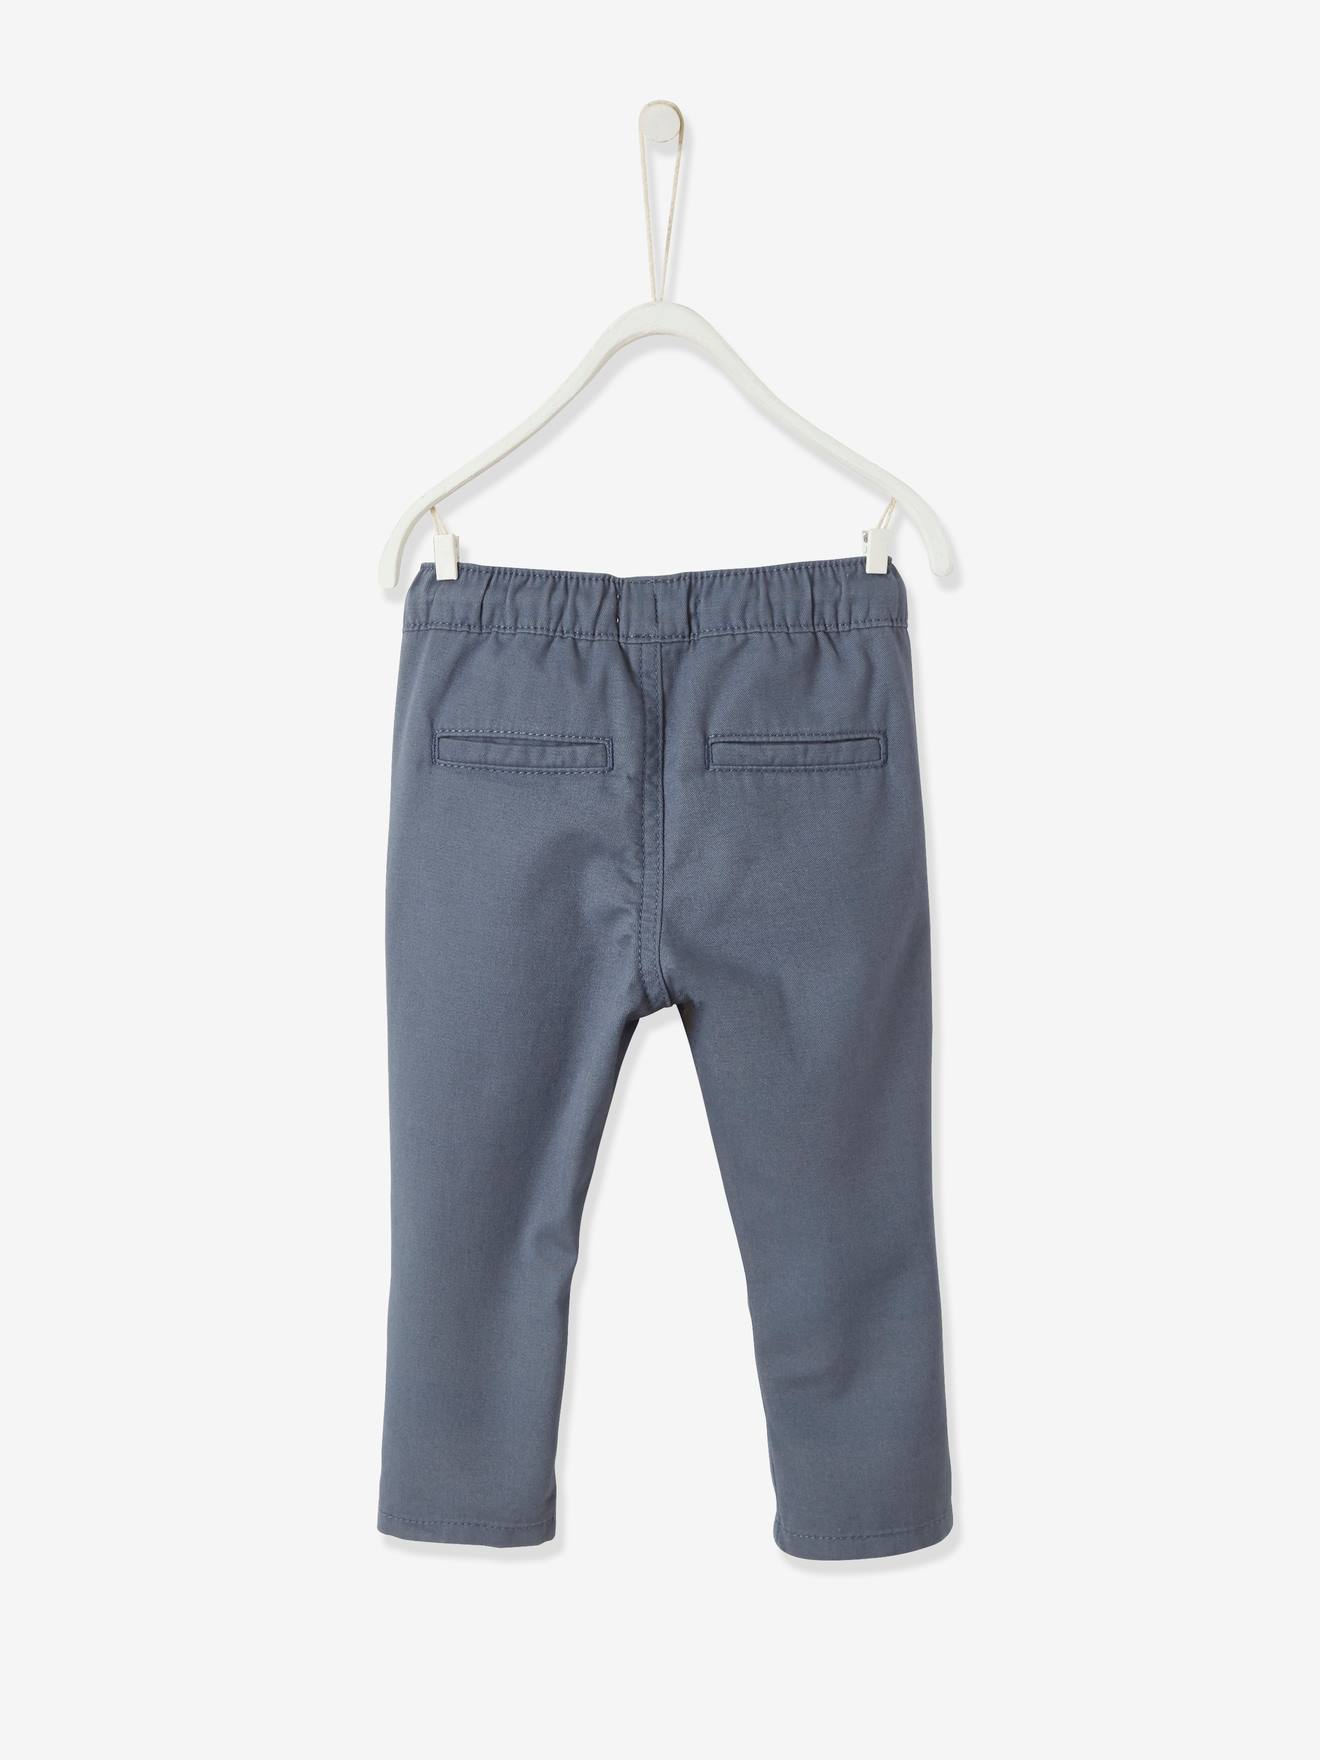 Cita Productivo Subrayar Pantalón de tela con cintura elástica, para bebé niño verde medio liso con  motivos - Vertbaudet